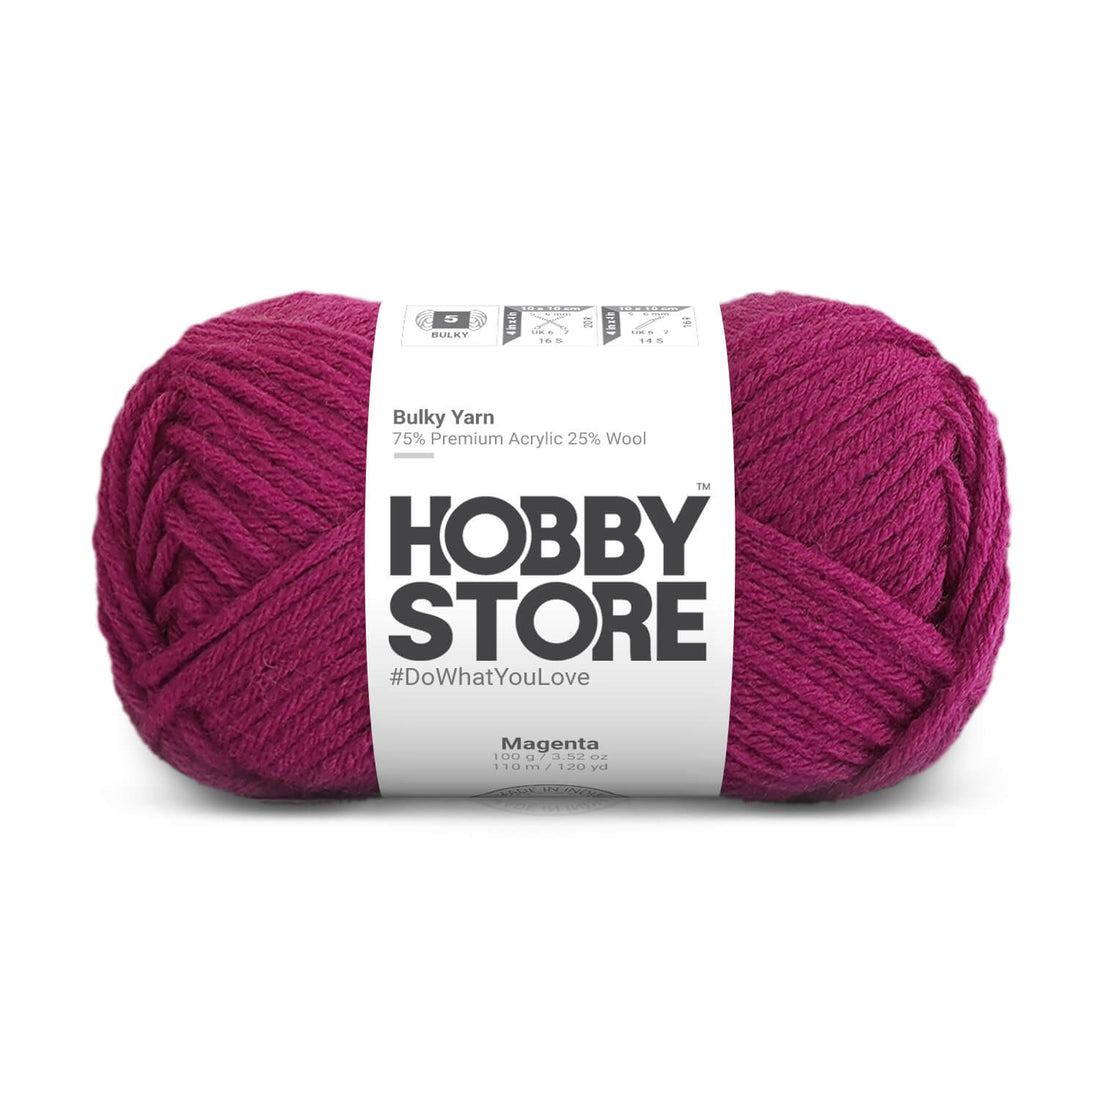 Bulky Yarn by Hobby Store - Magenta 6001